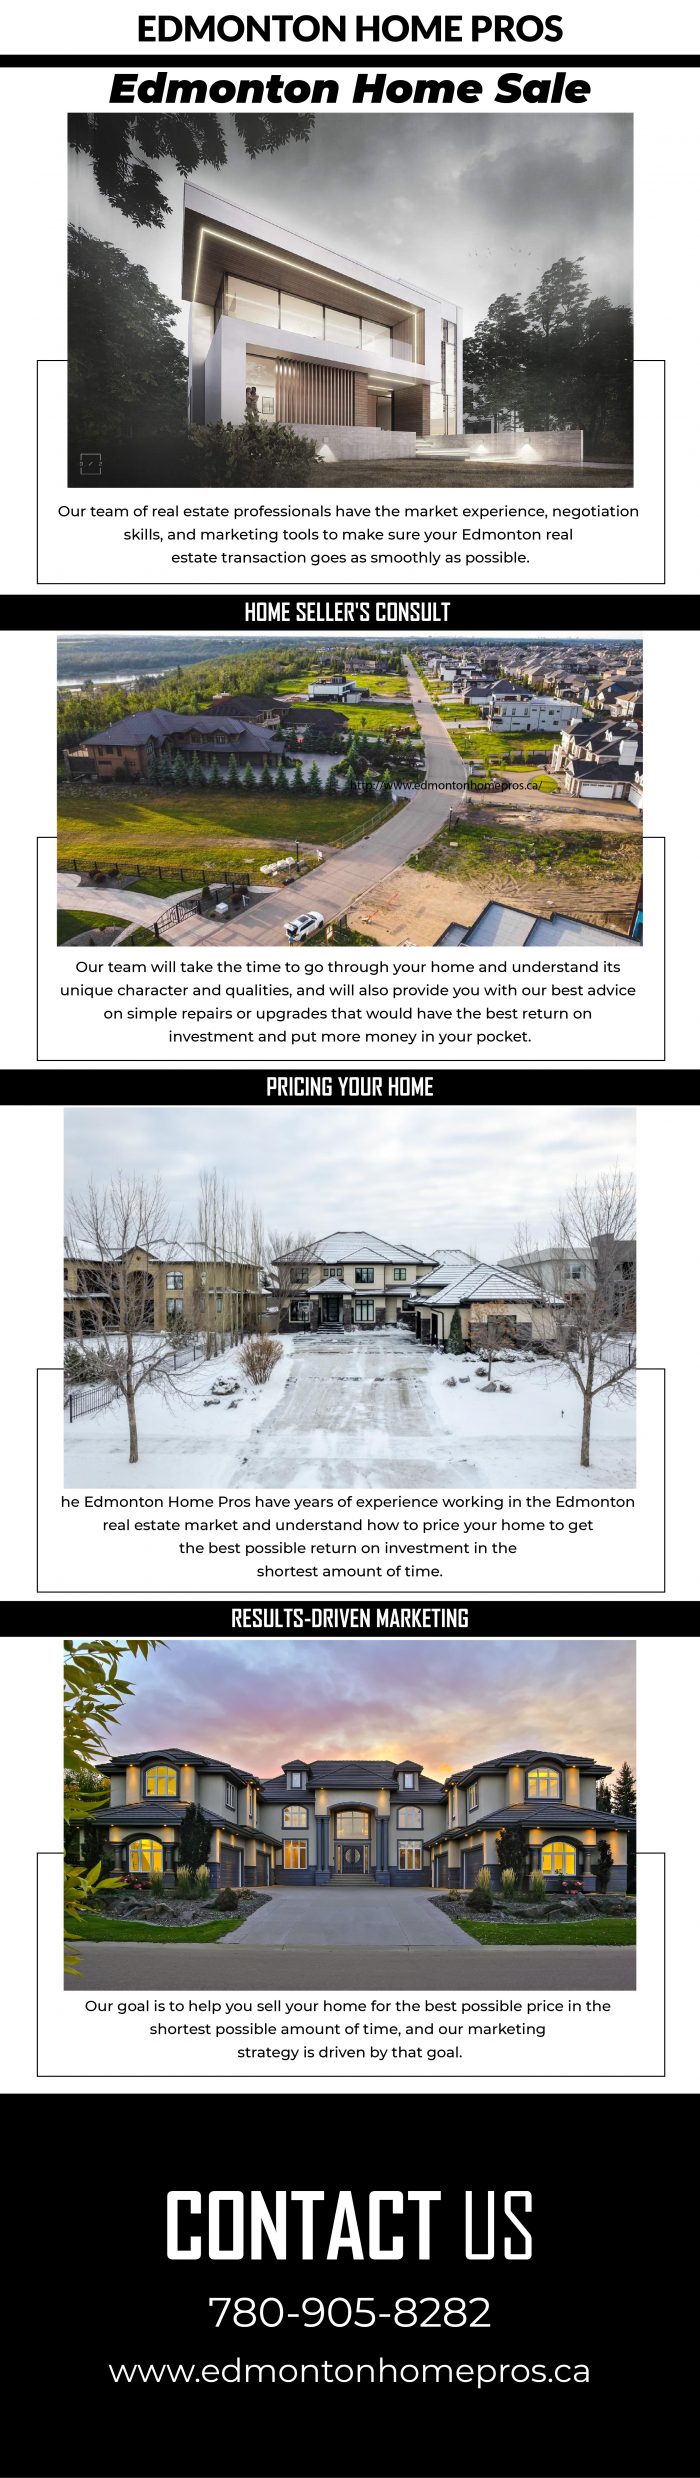 Go For The Best Edmonton Home Sale – EDMONTON HOME PROS